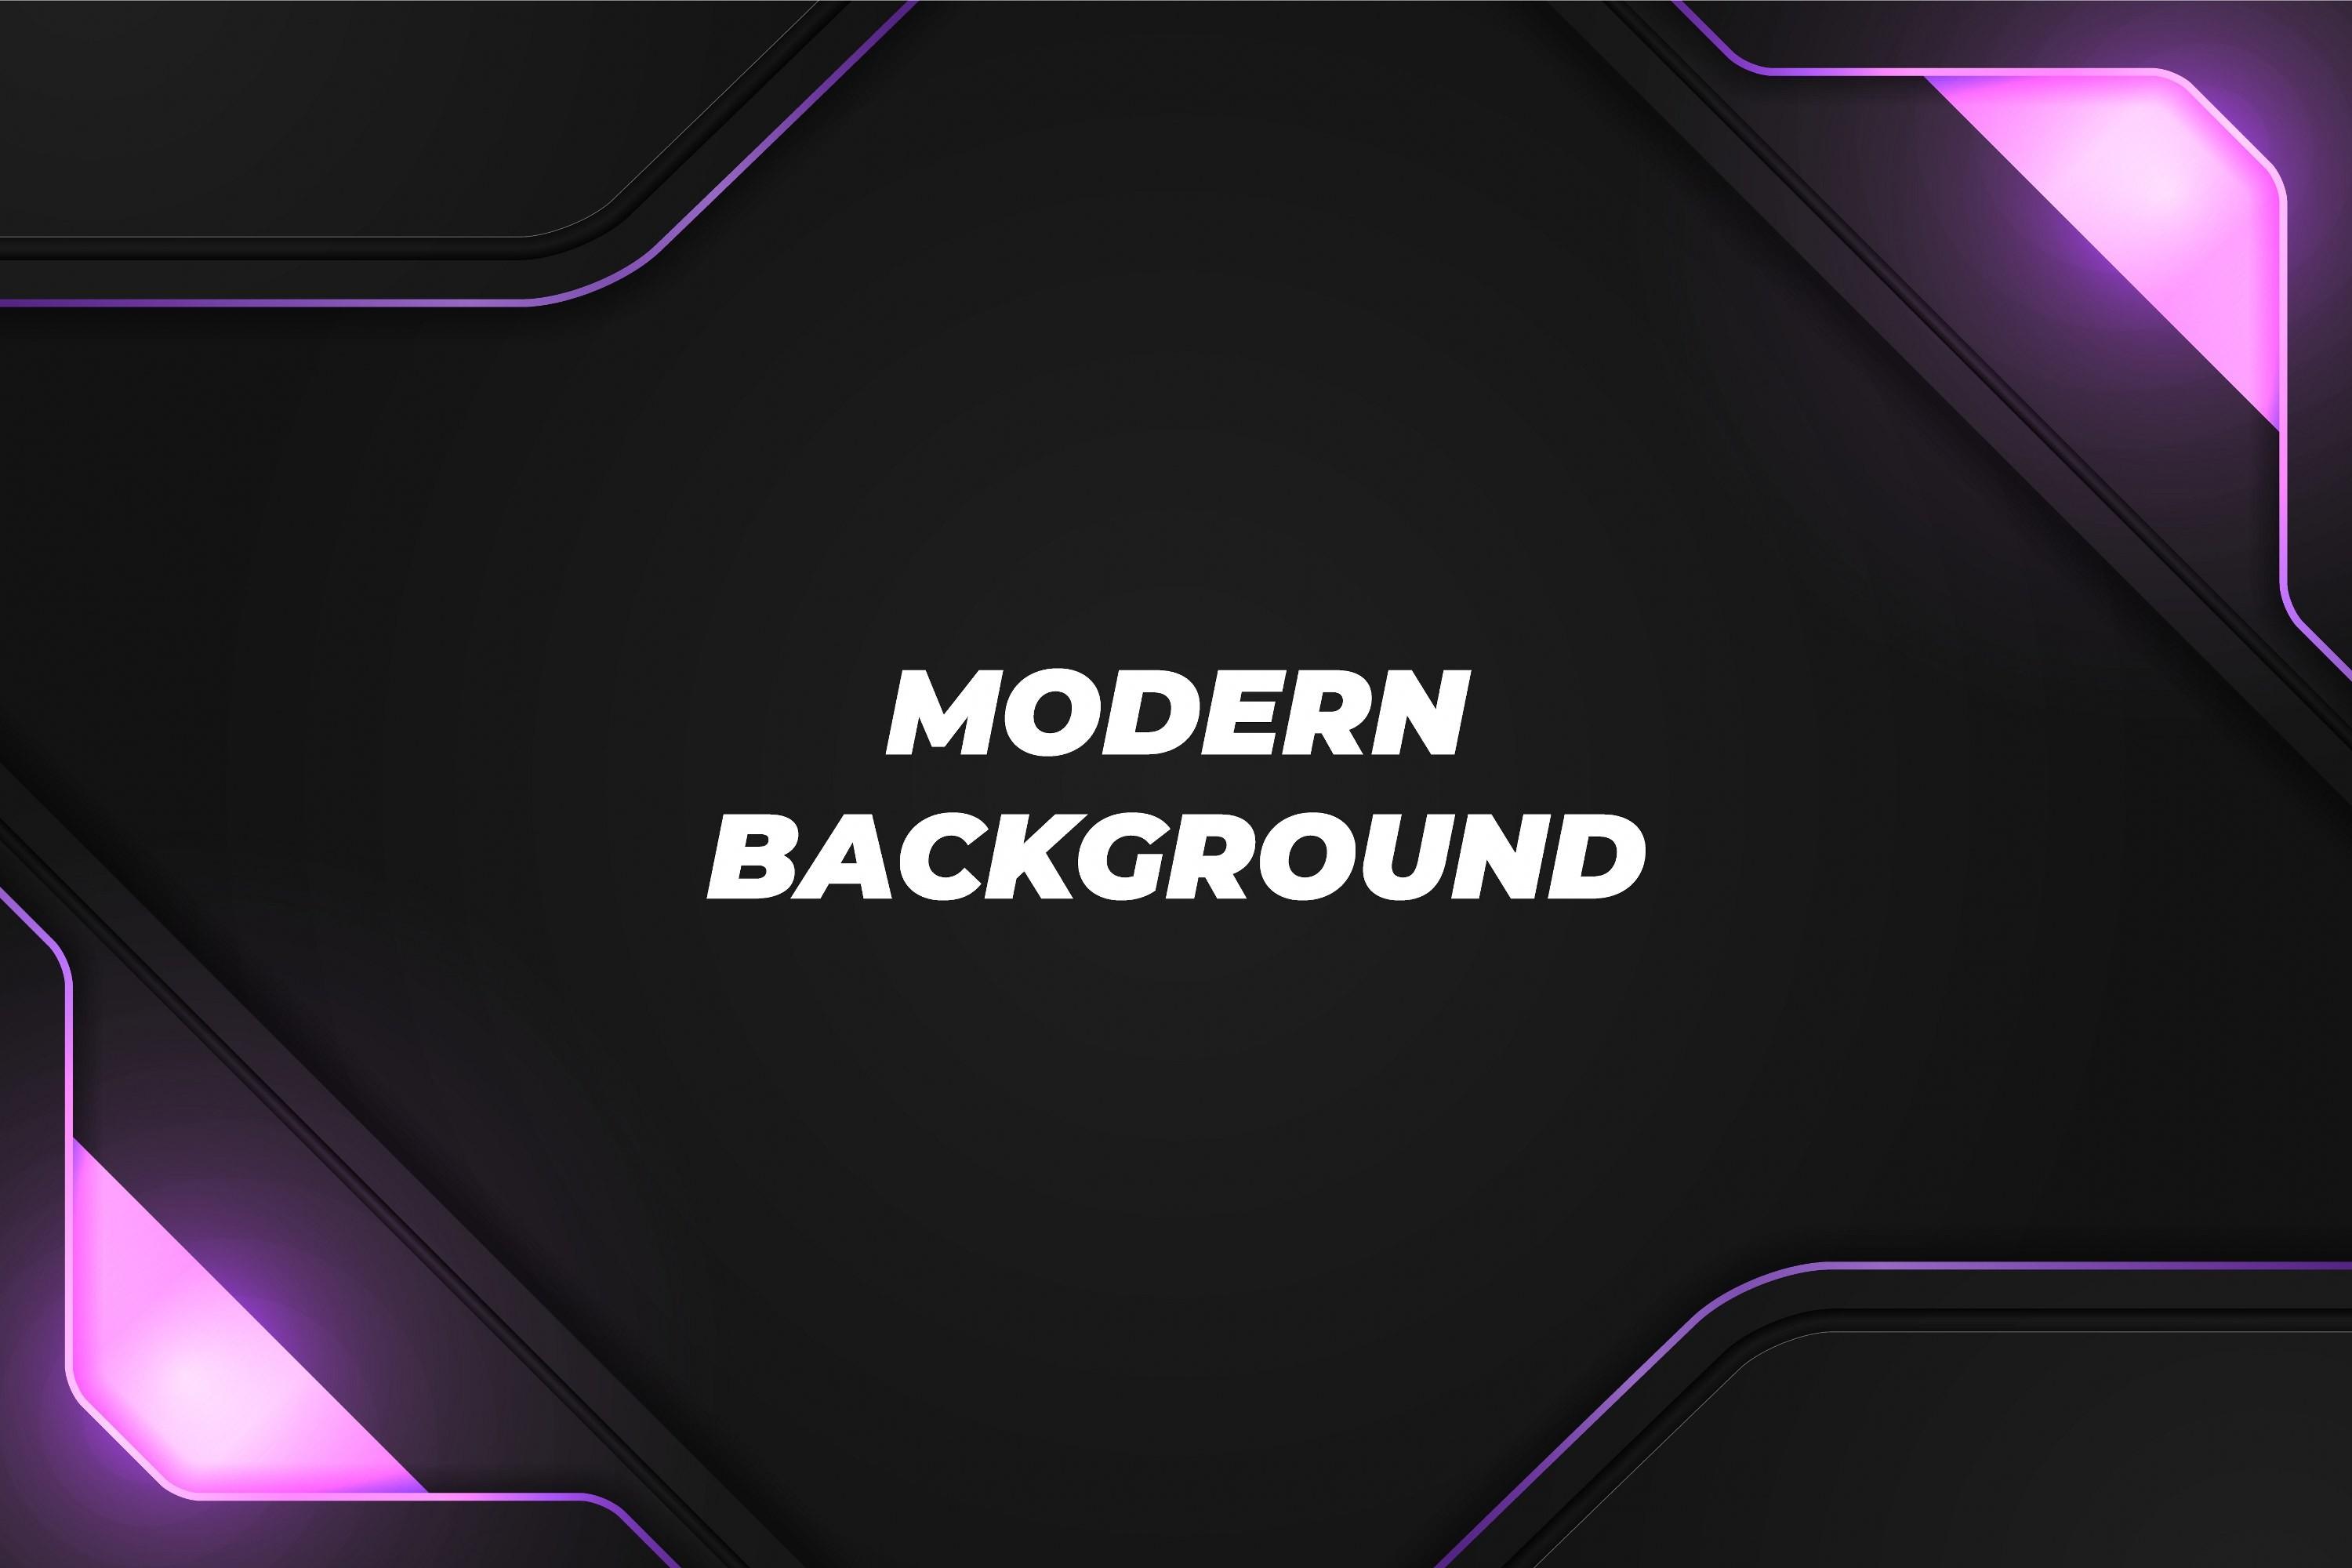 Modern Background Black and Purple